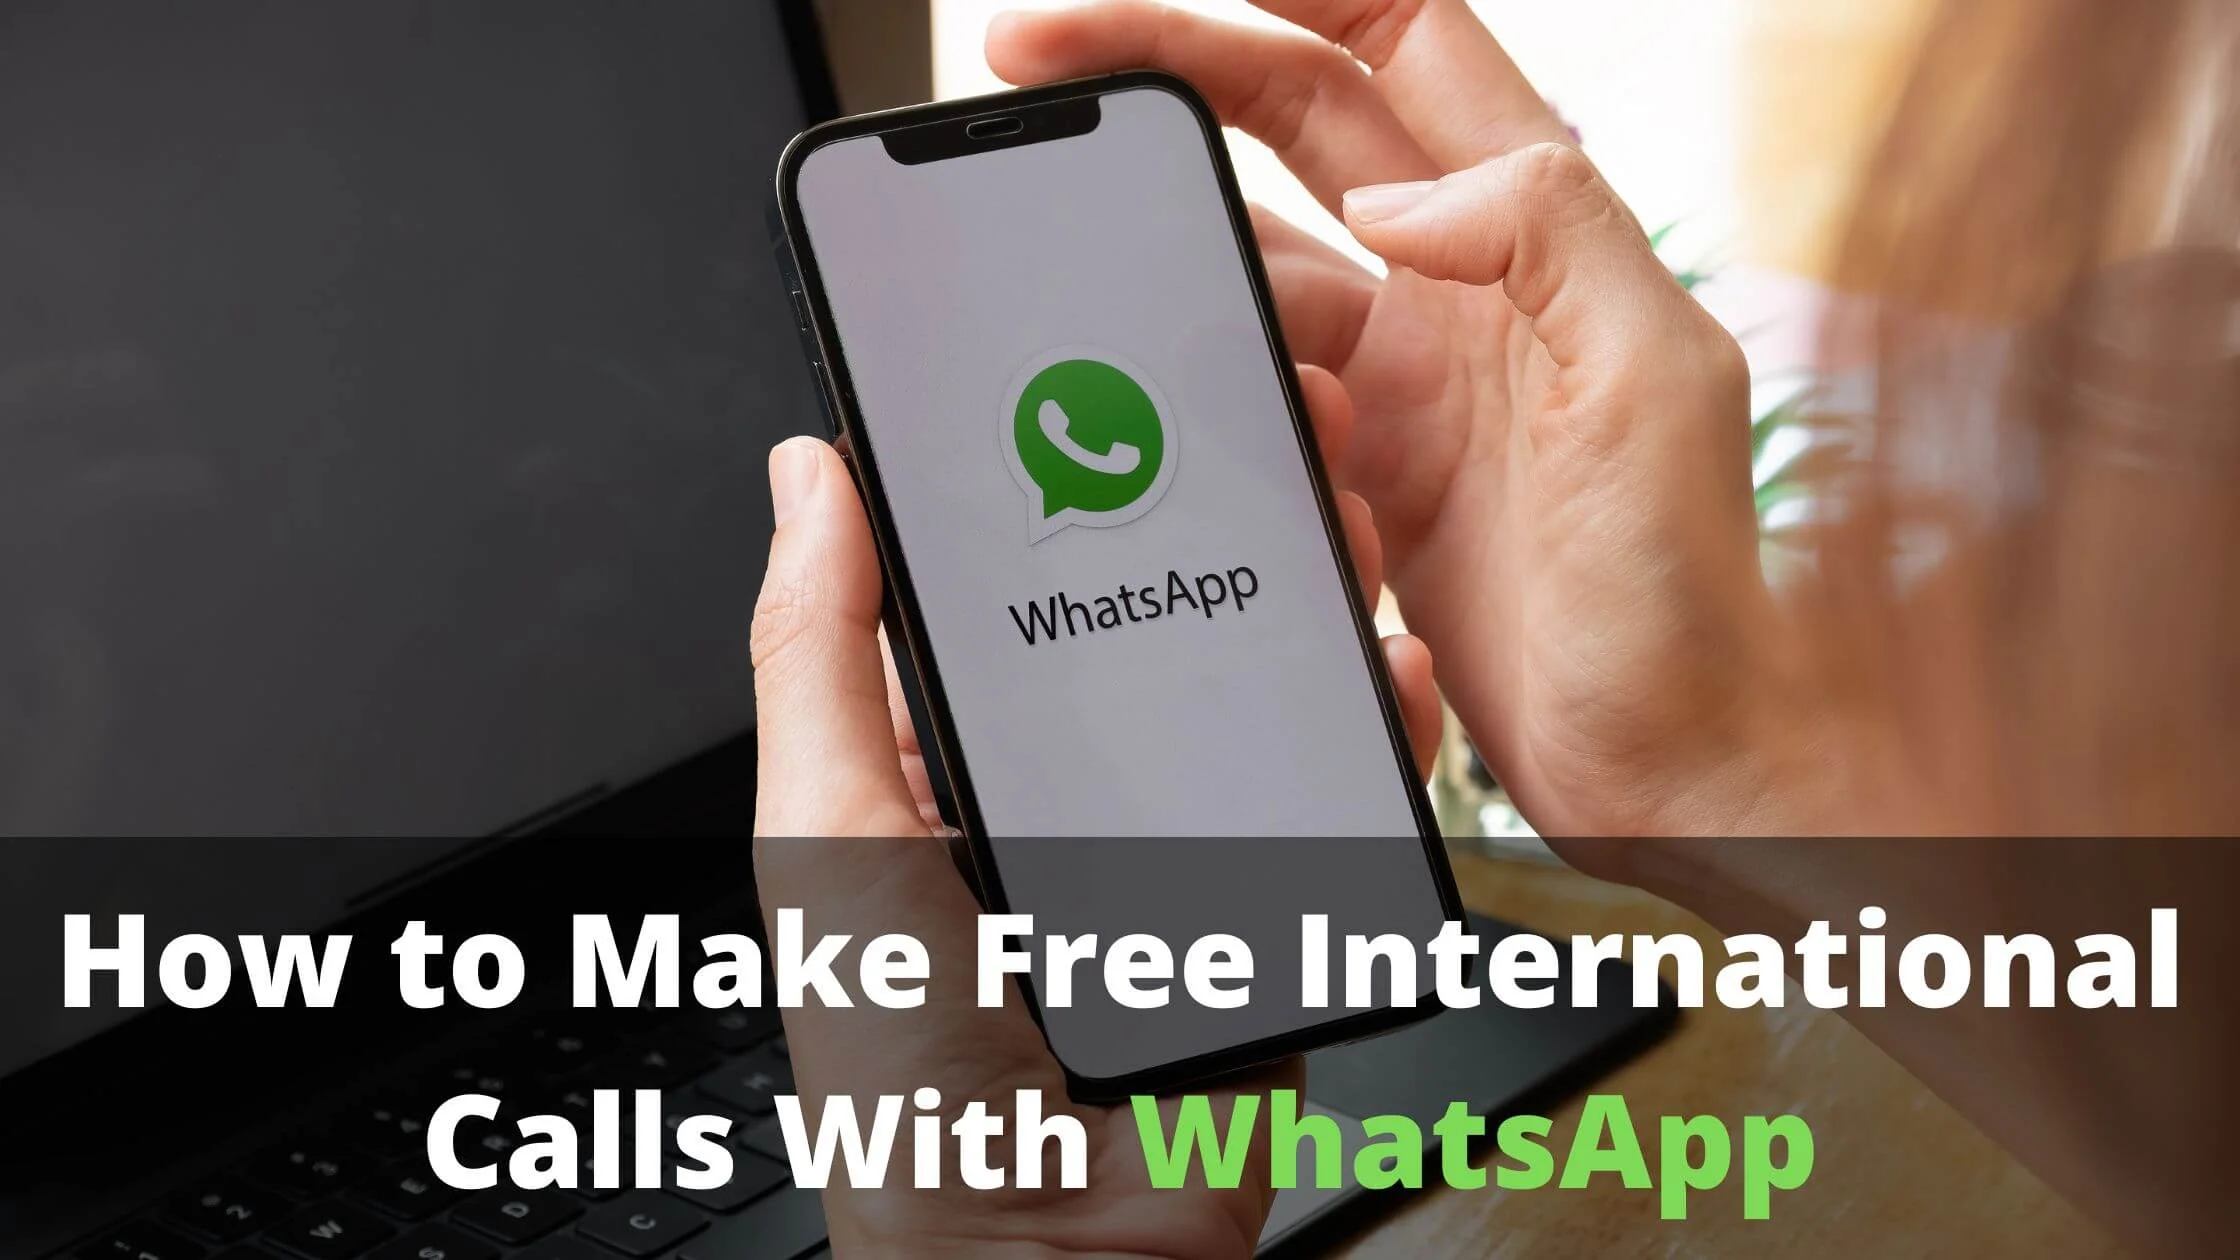 Make Free International Calls With WhatsApp